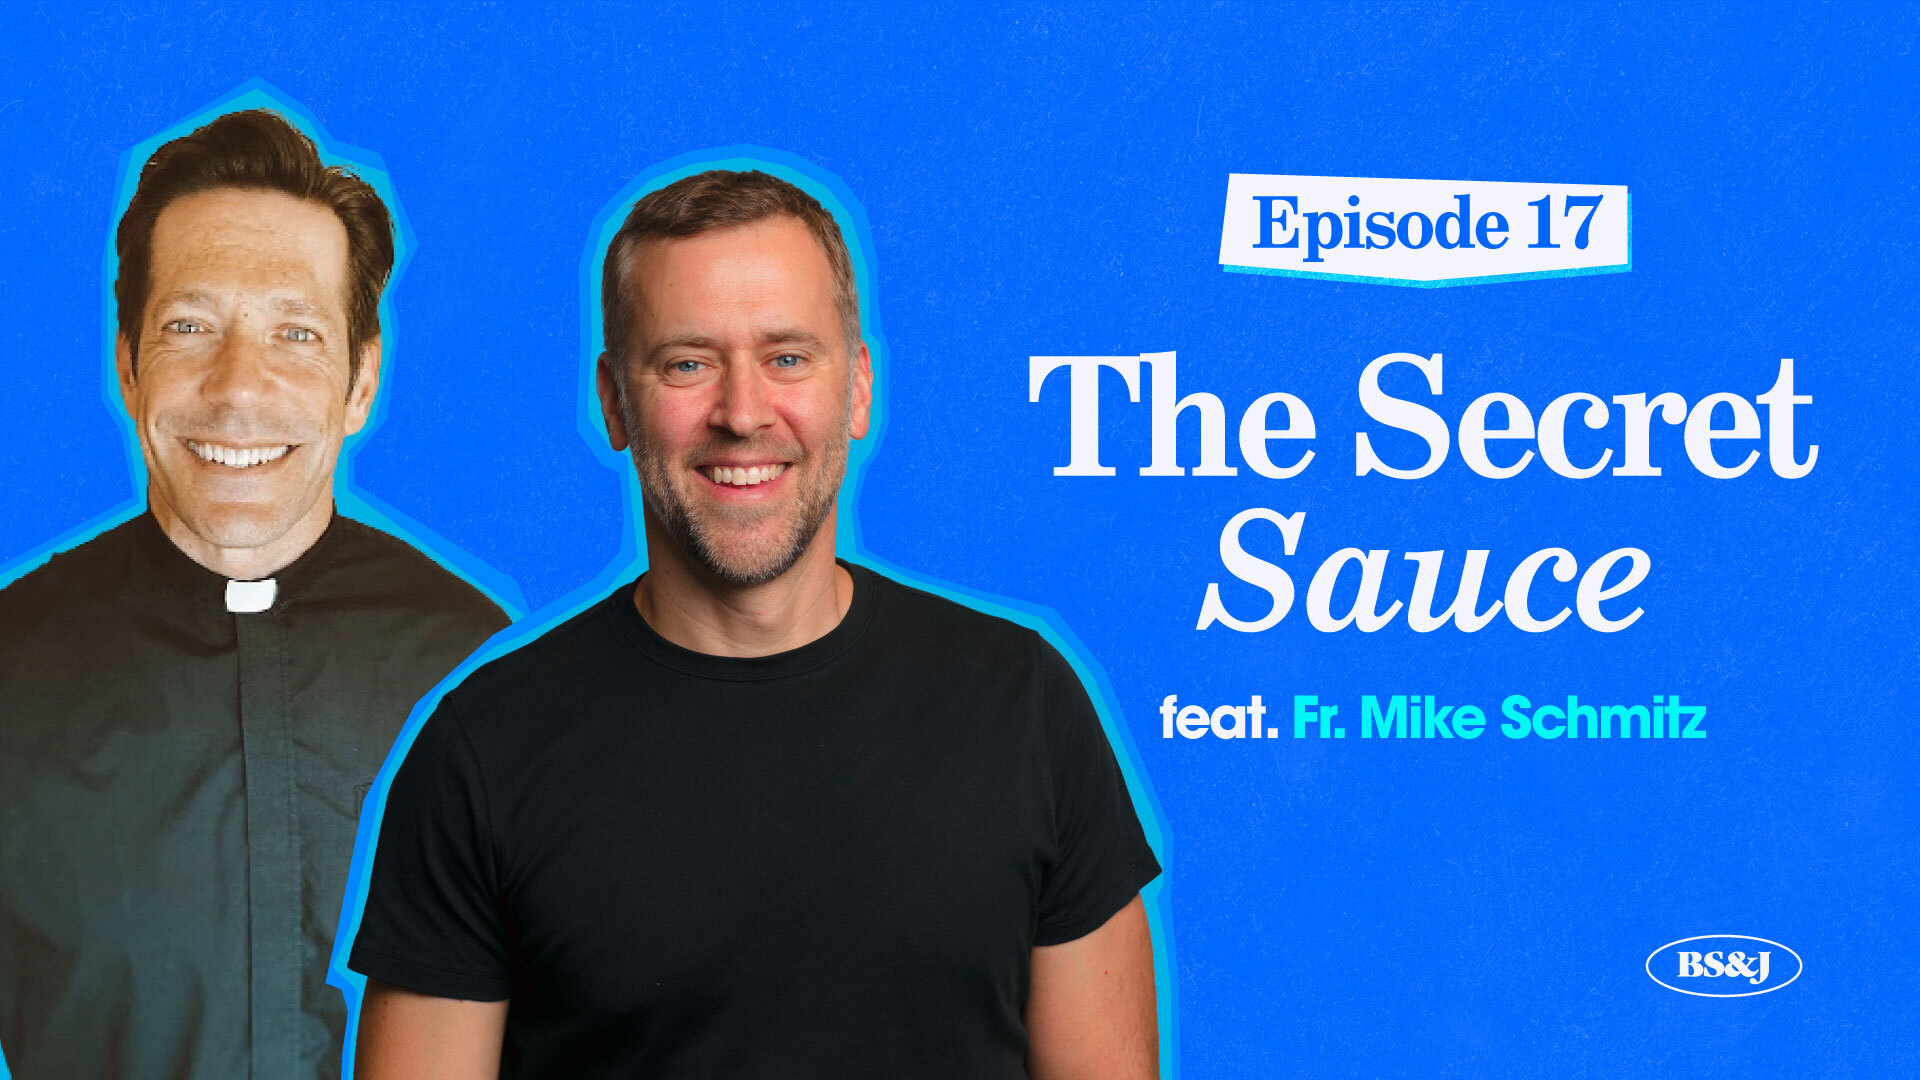 Episode 17 – The Secret Sauce with Fr. Mike Schmitz